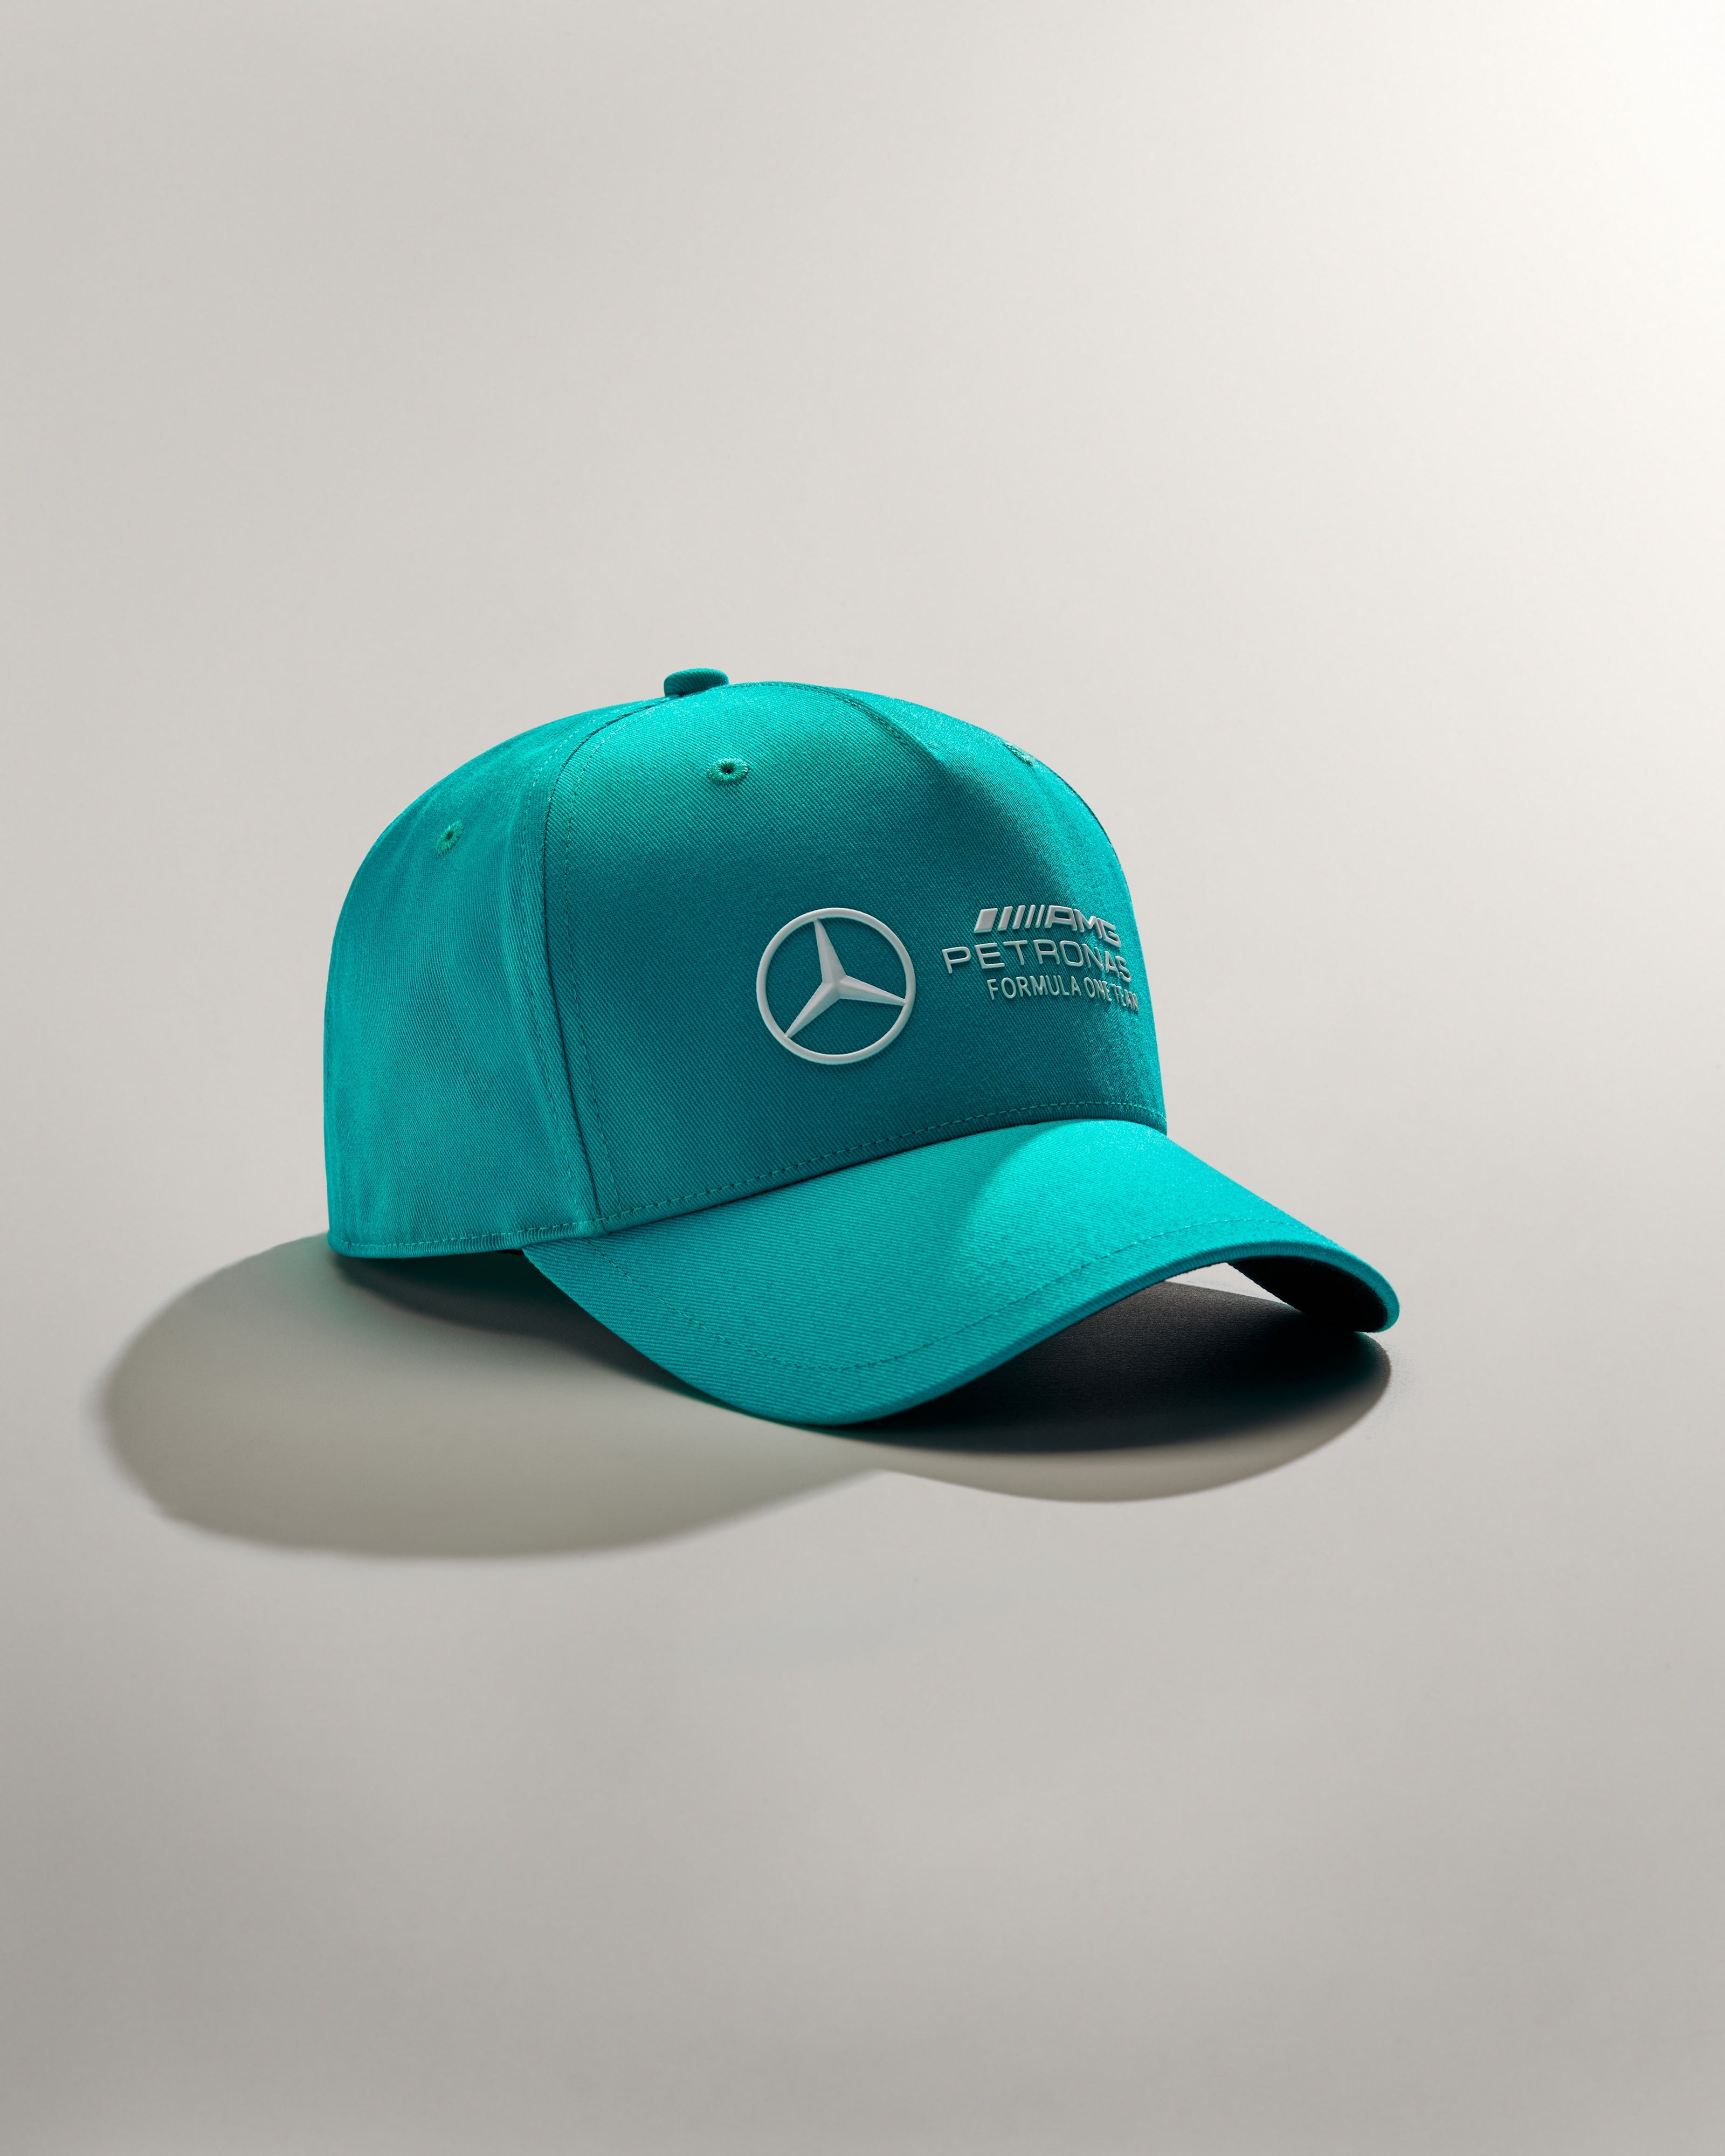 Fan Caps & Hats | Official Mercedes-AMG F1 Store